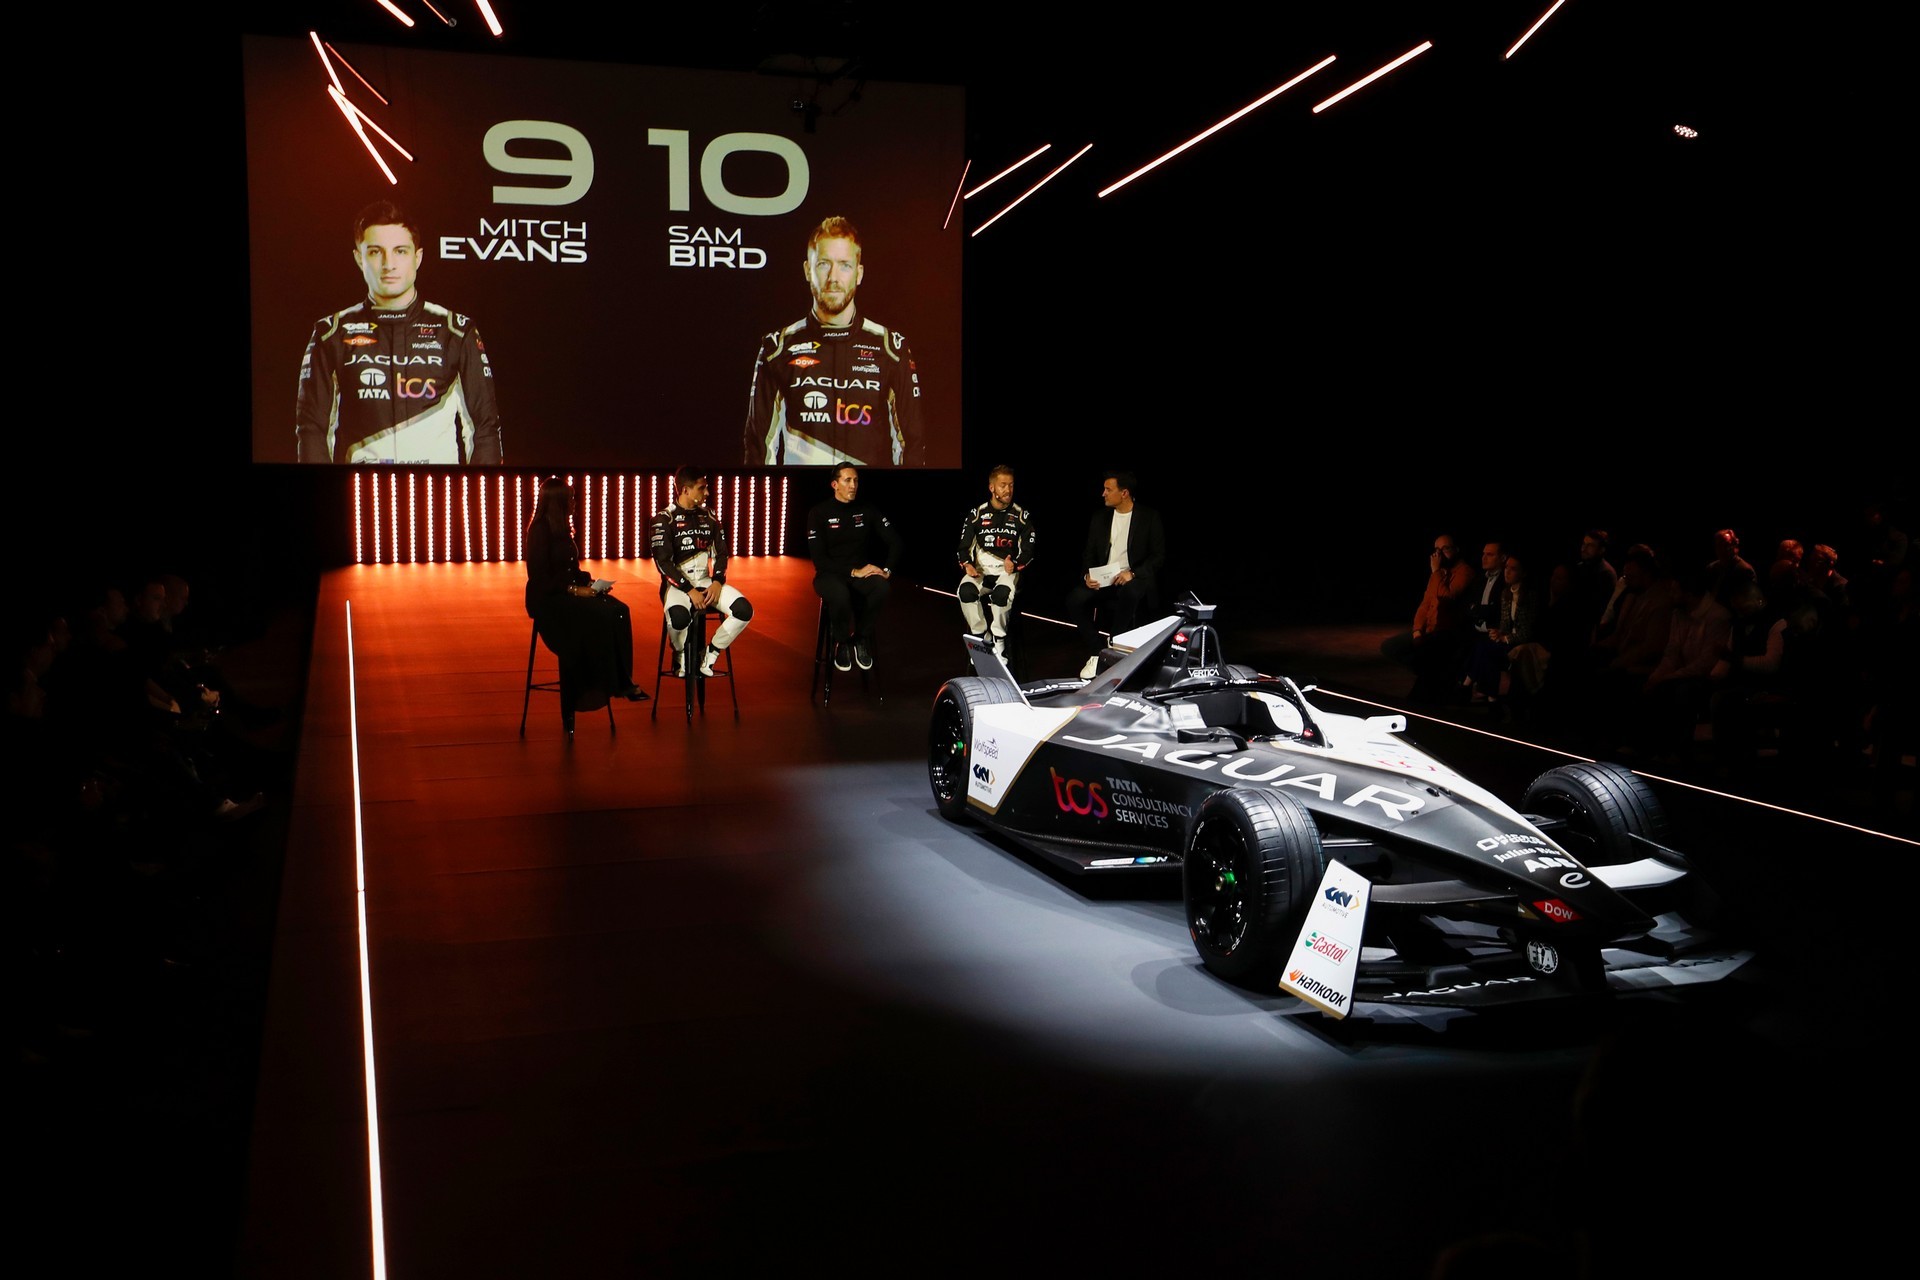 Jaguar unveils I-Type 5 race car ahead of new Formula E World